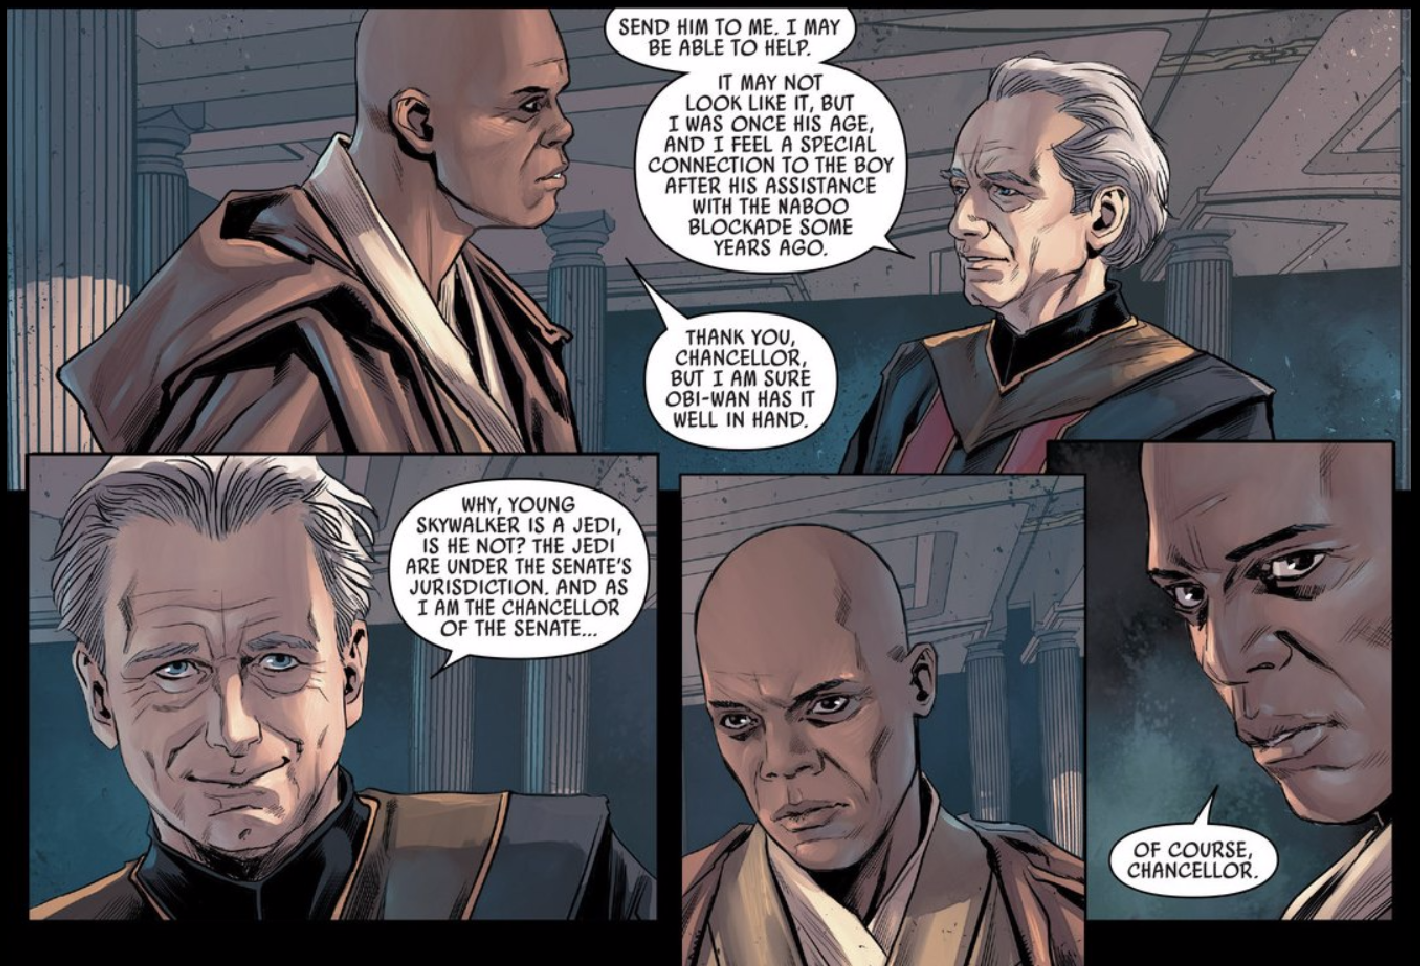 Marvel’s Obi-Wan & Anakin Star Wars Comic Is Pretty Pointless